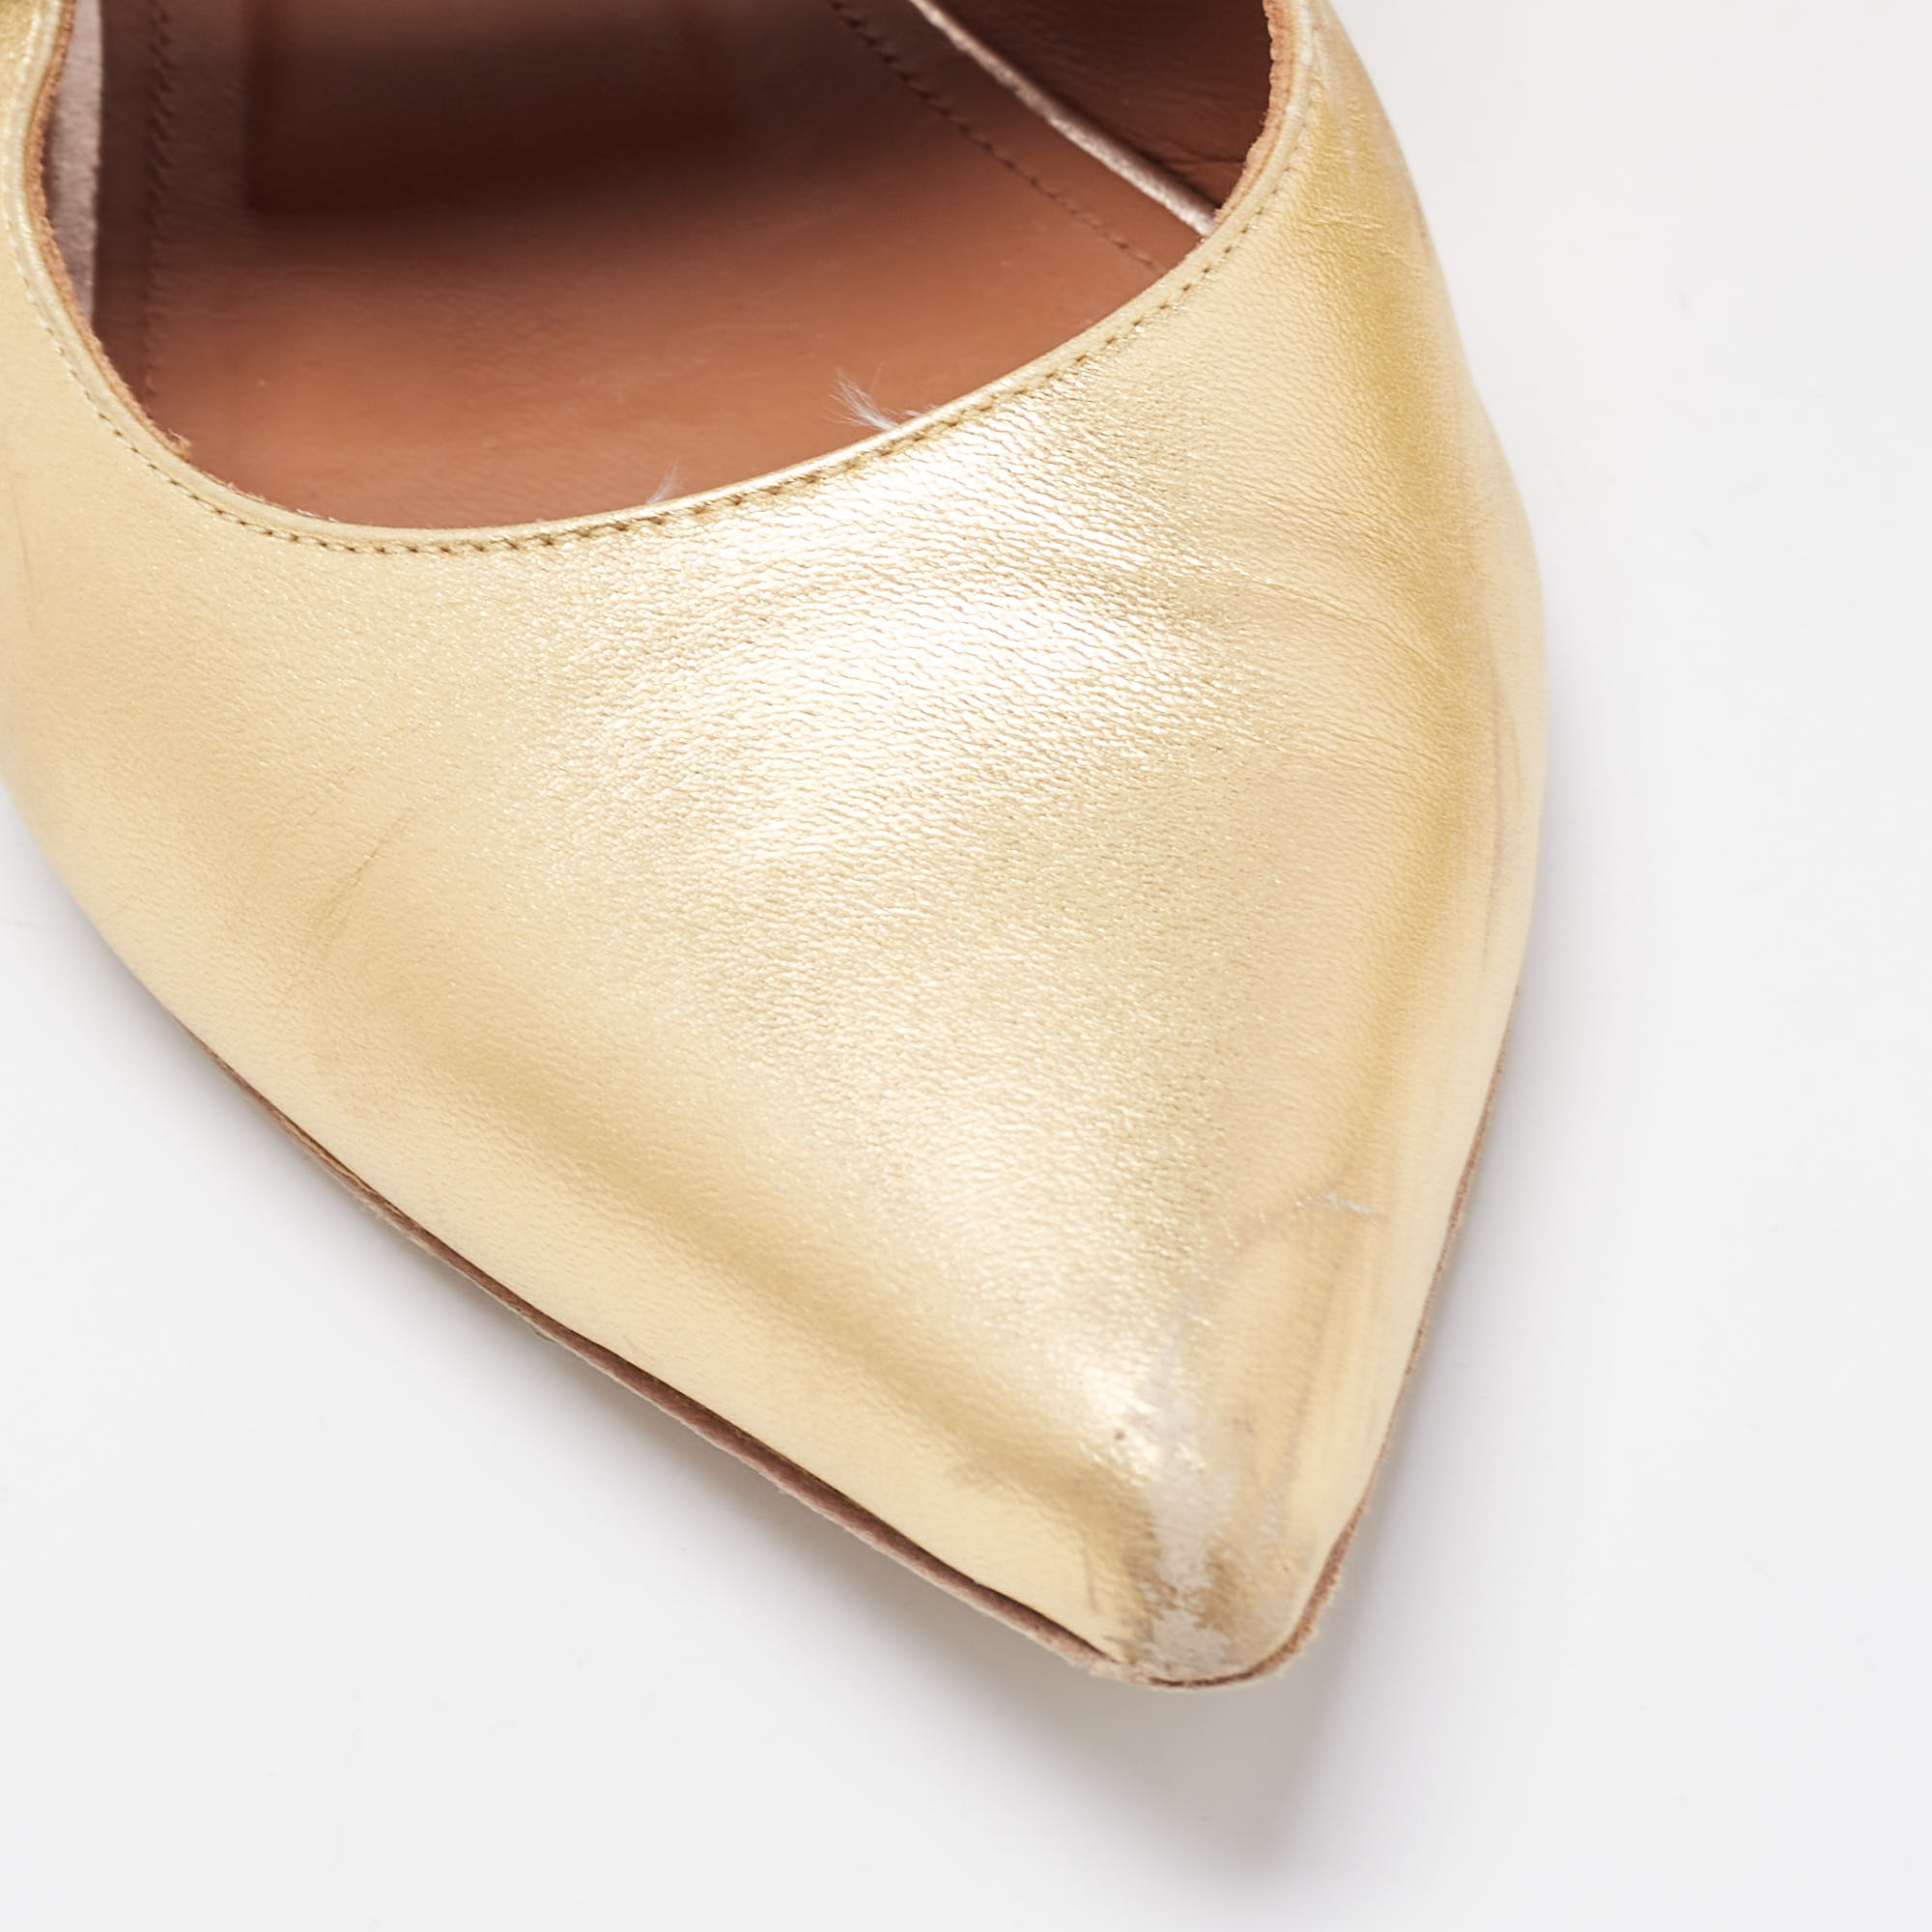 Malone Souliers Metallic Gold Leather Roy Luwolt Ballet Flats Size 39